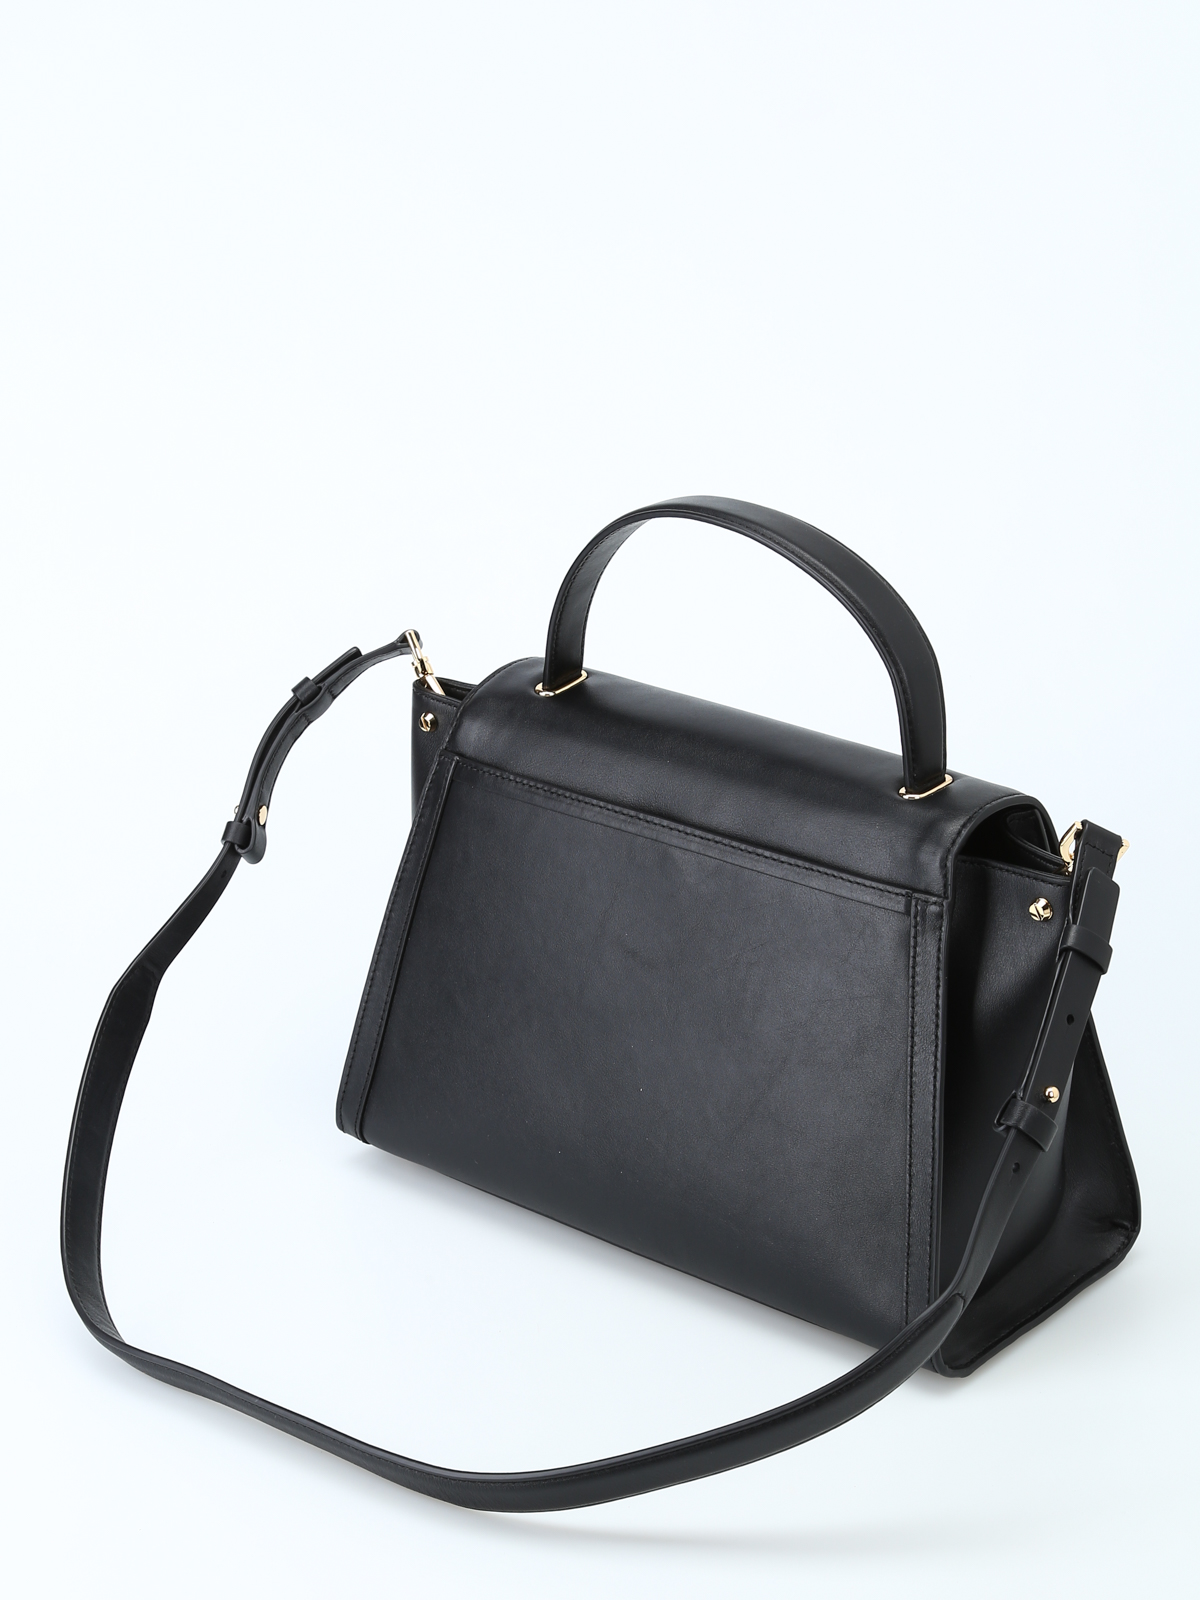 Bowling bags Michael Kors - Whitney L black top handle satchel -  30T8GXIS3L001